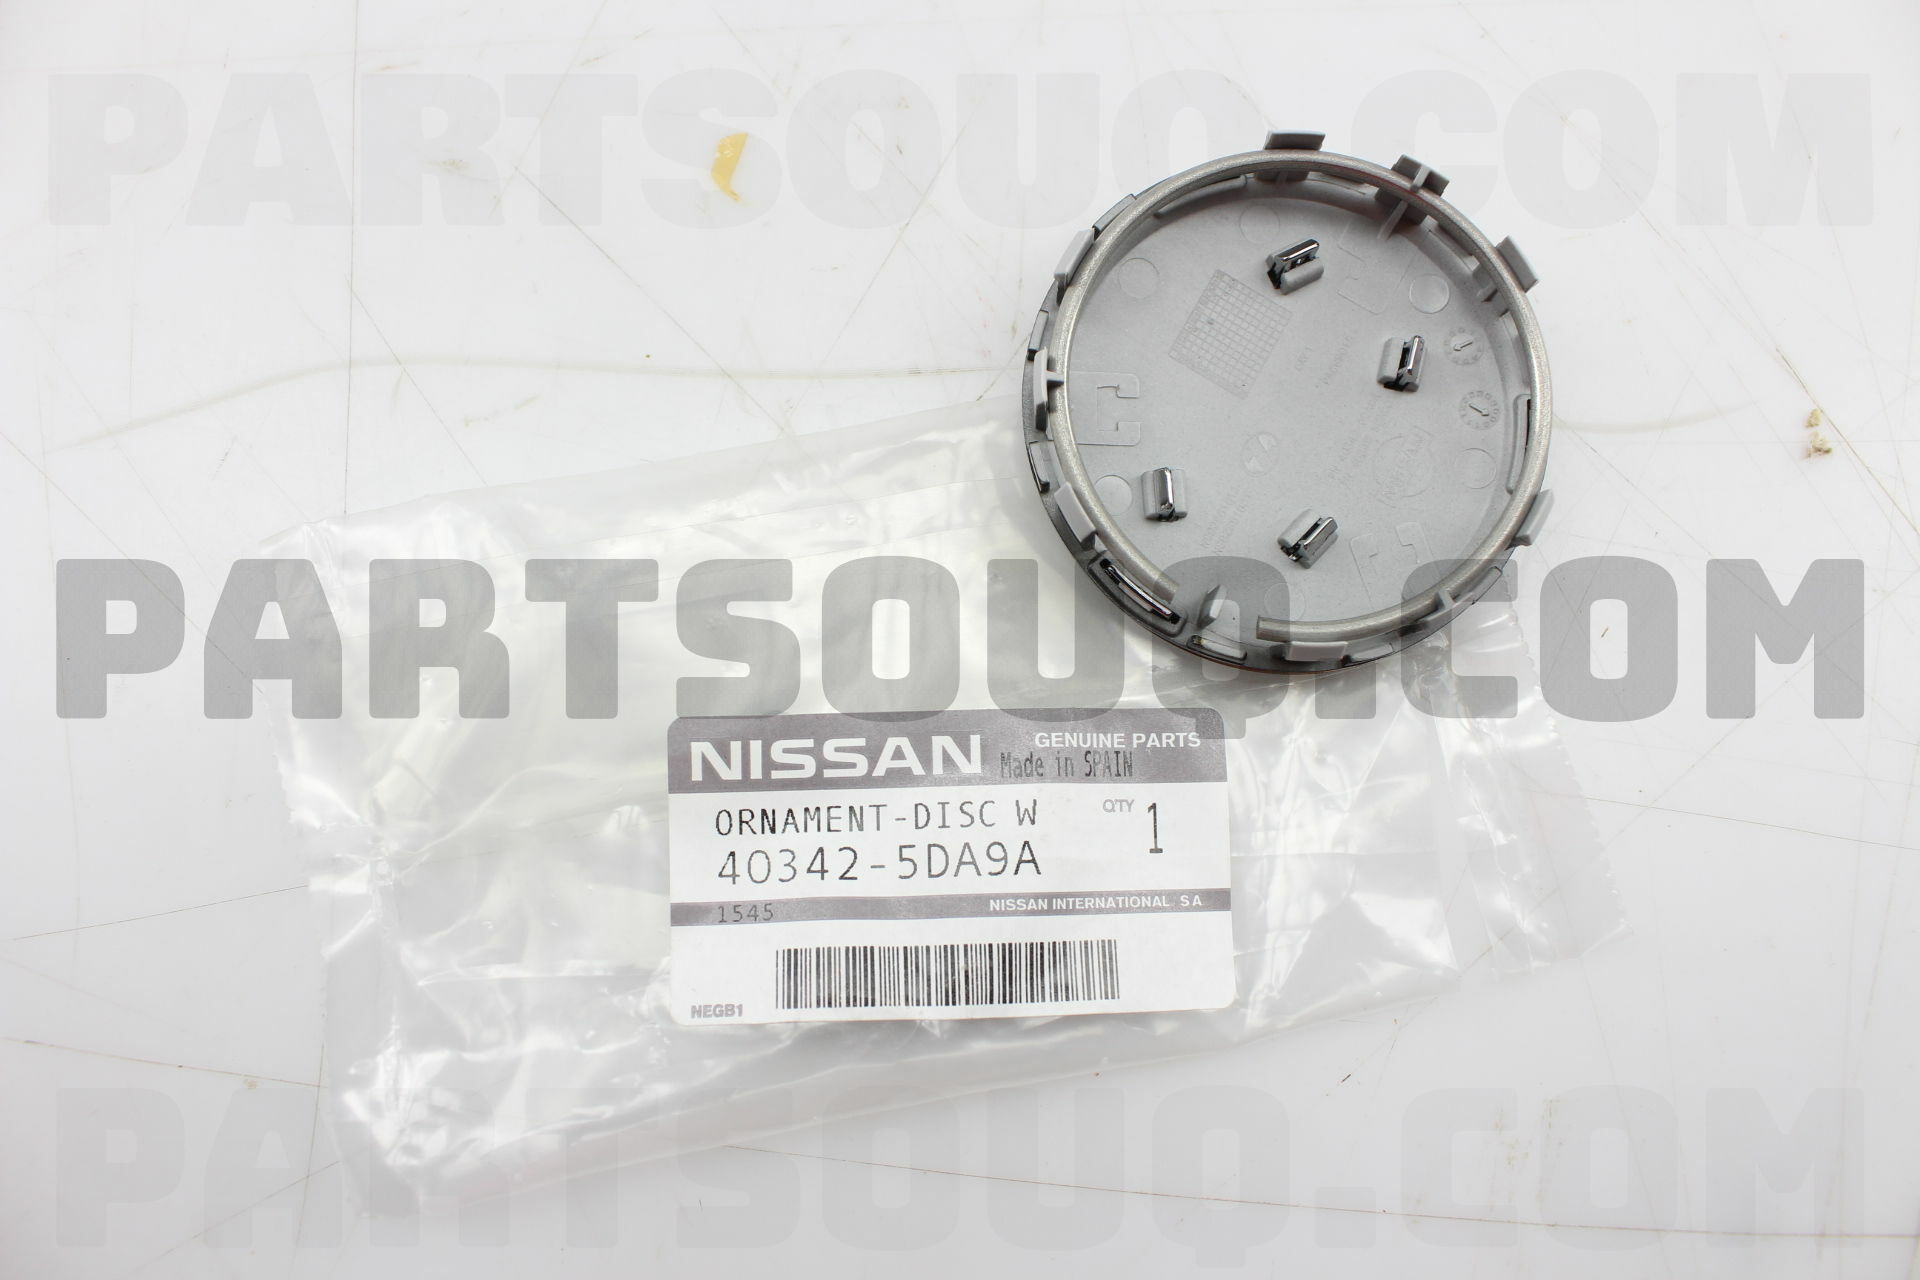 403425DA9A Nissan ORNAMENT DISC W